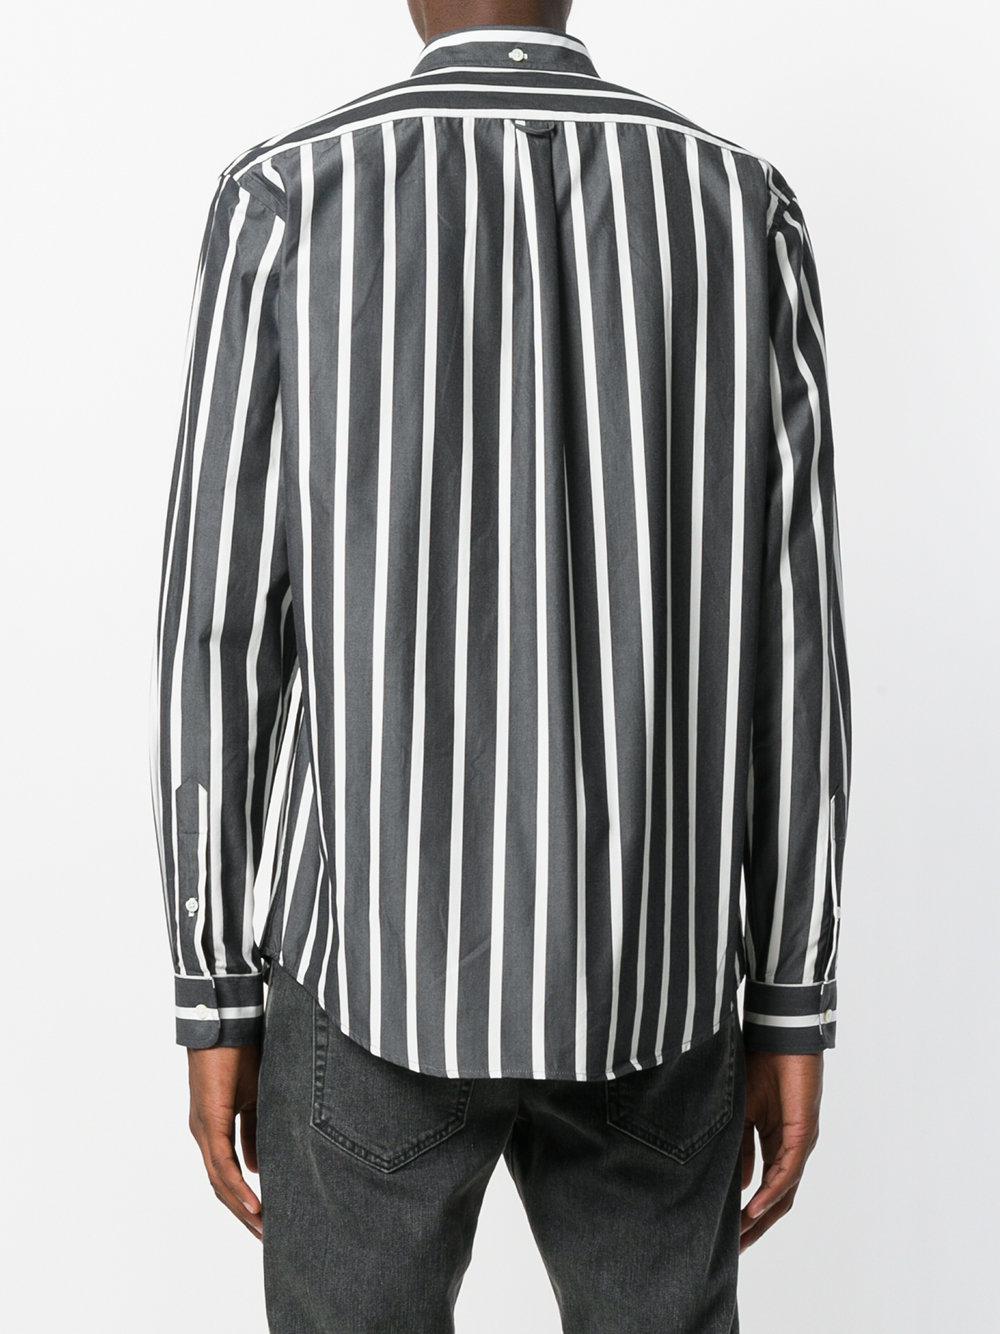 Lyst - Schnayderman'S Striped Shirt in Black for Men